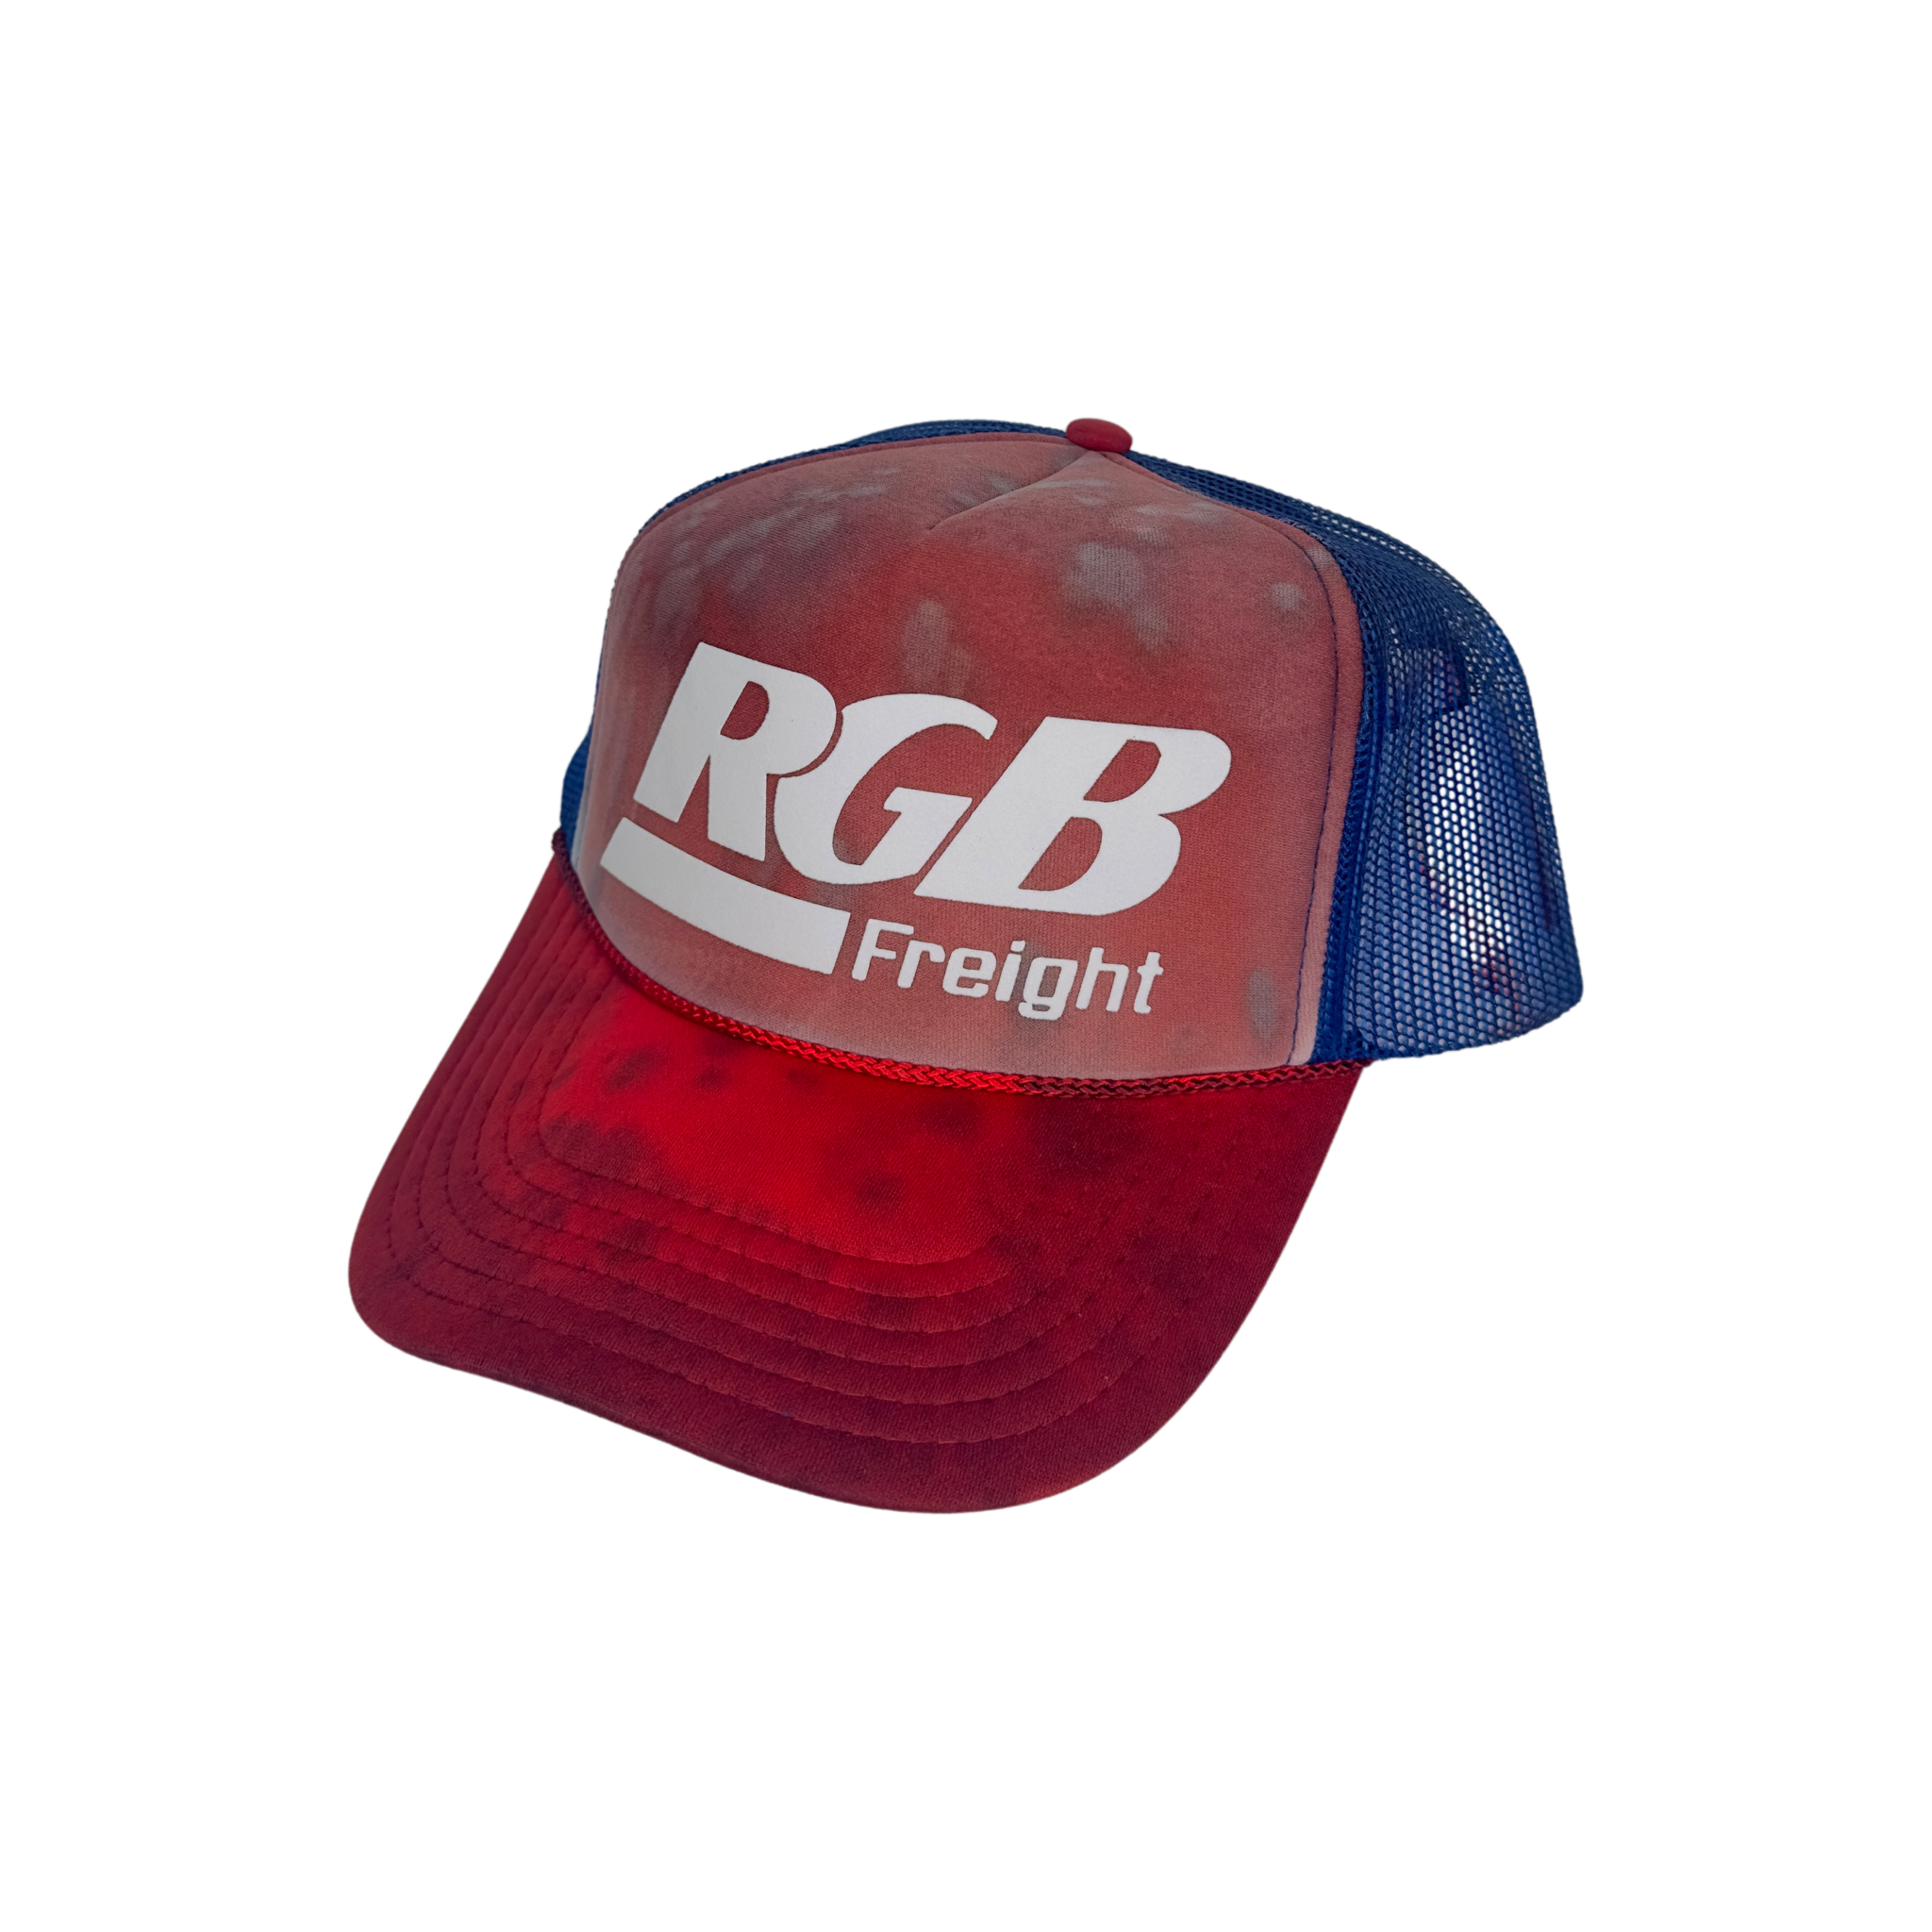 RGB FREIGHT TRUCKER HAT -  1 of 1 AMERICANA FADE